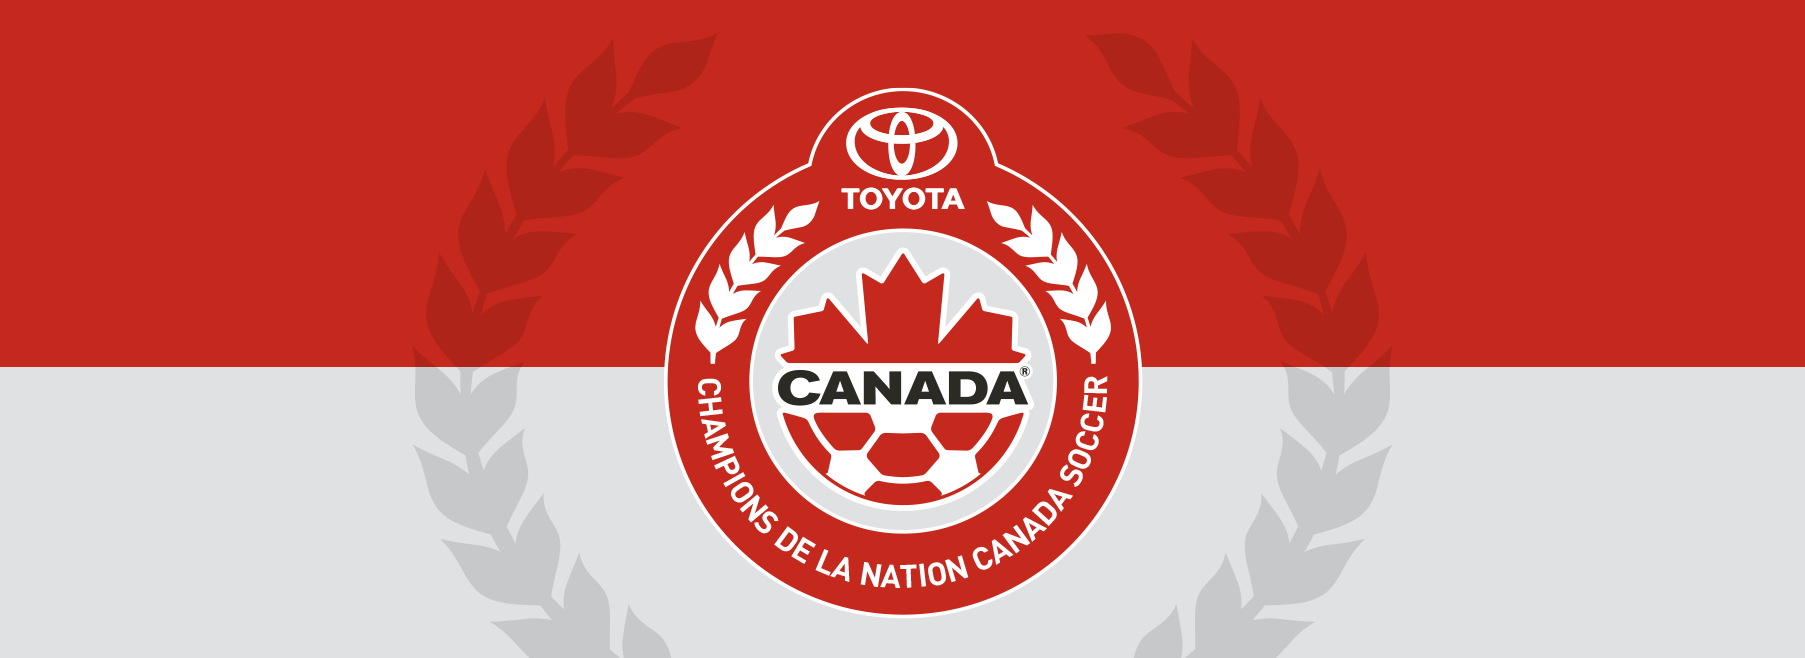 Champions de la nation Canada Soccer